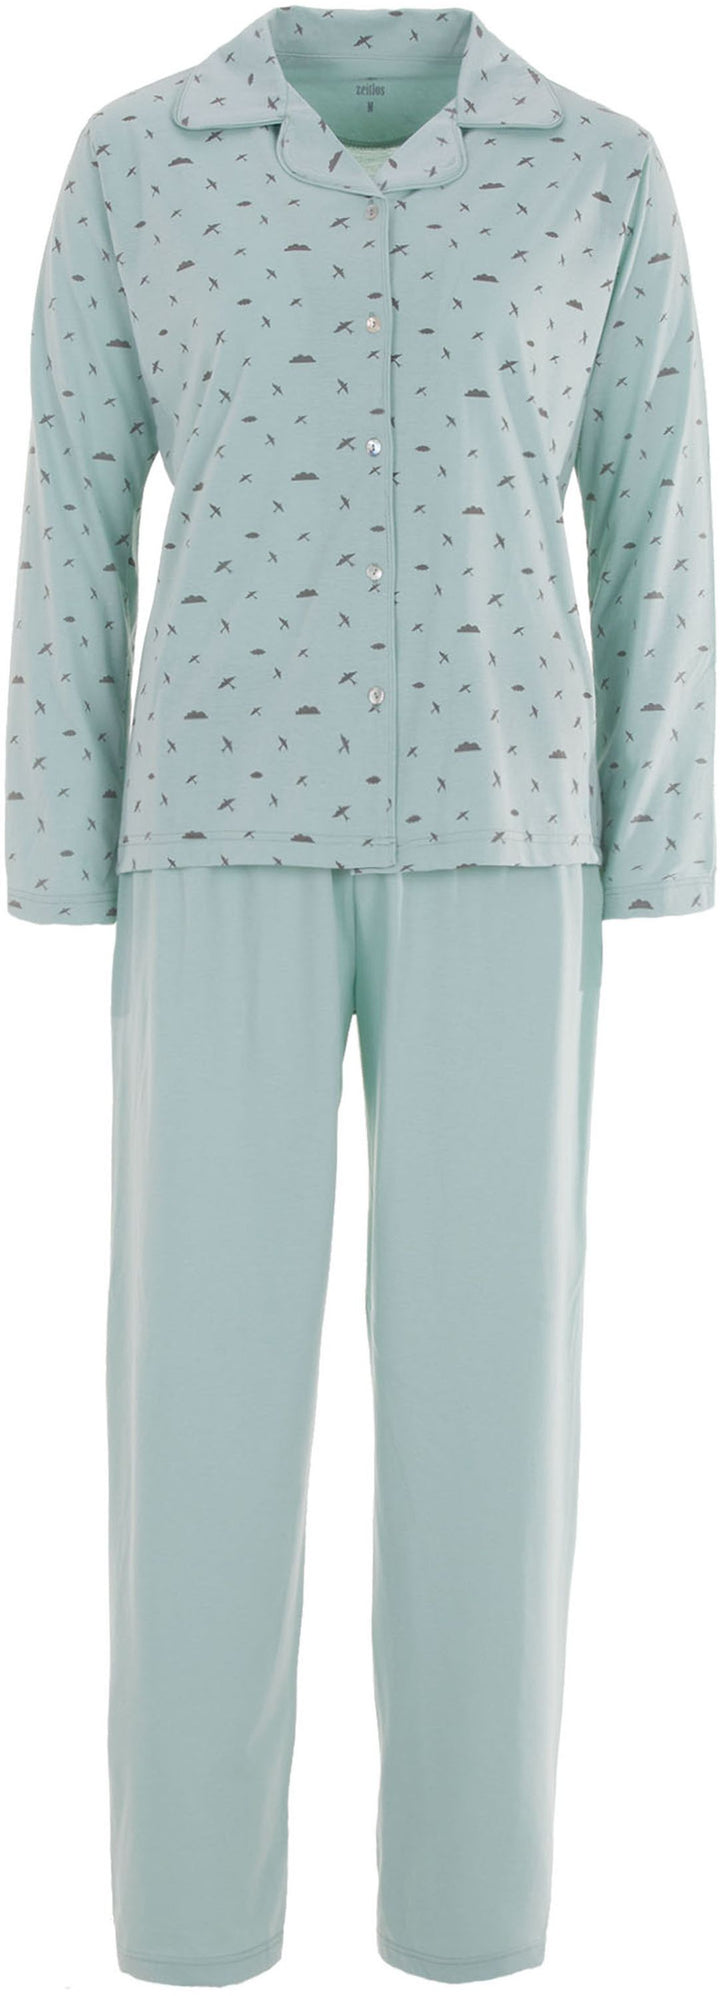 Pyjama Set Langarm - Schwalbe